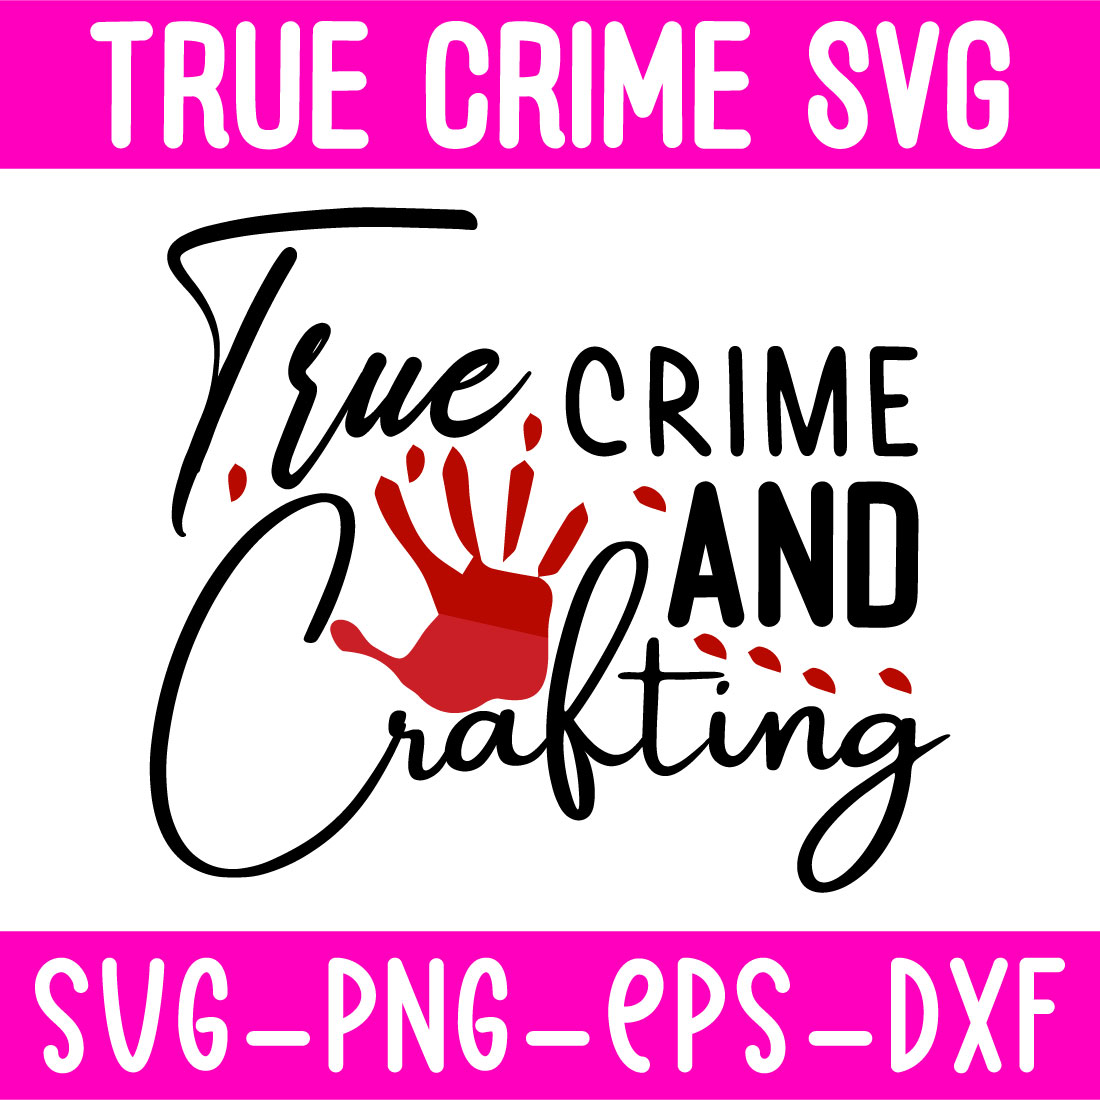 True-Crime Svg cover image.